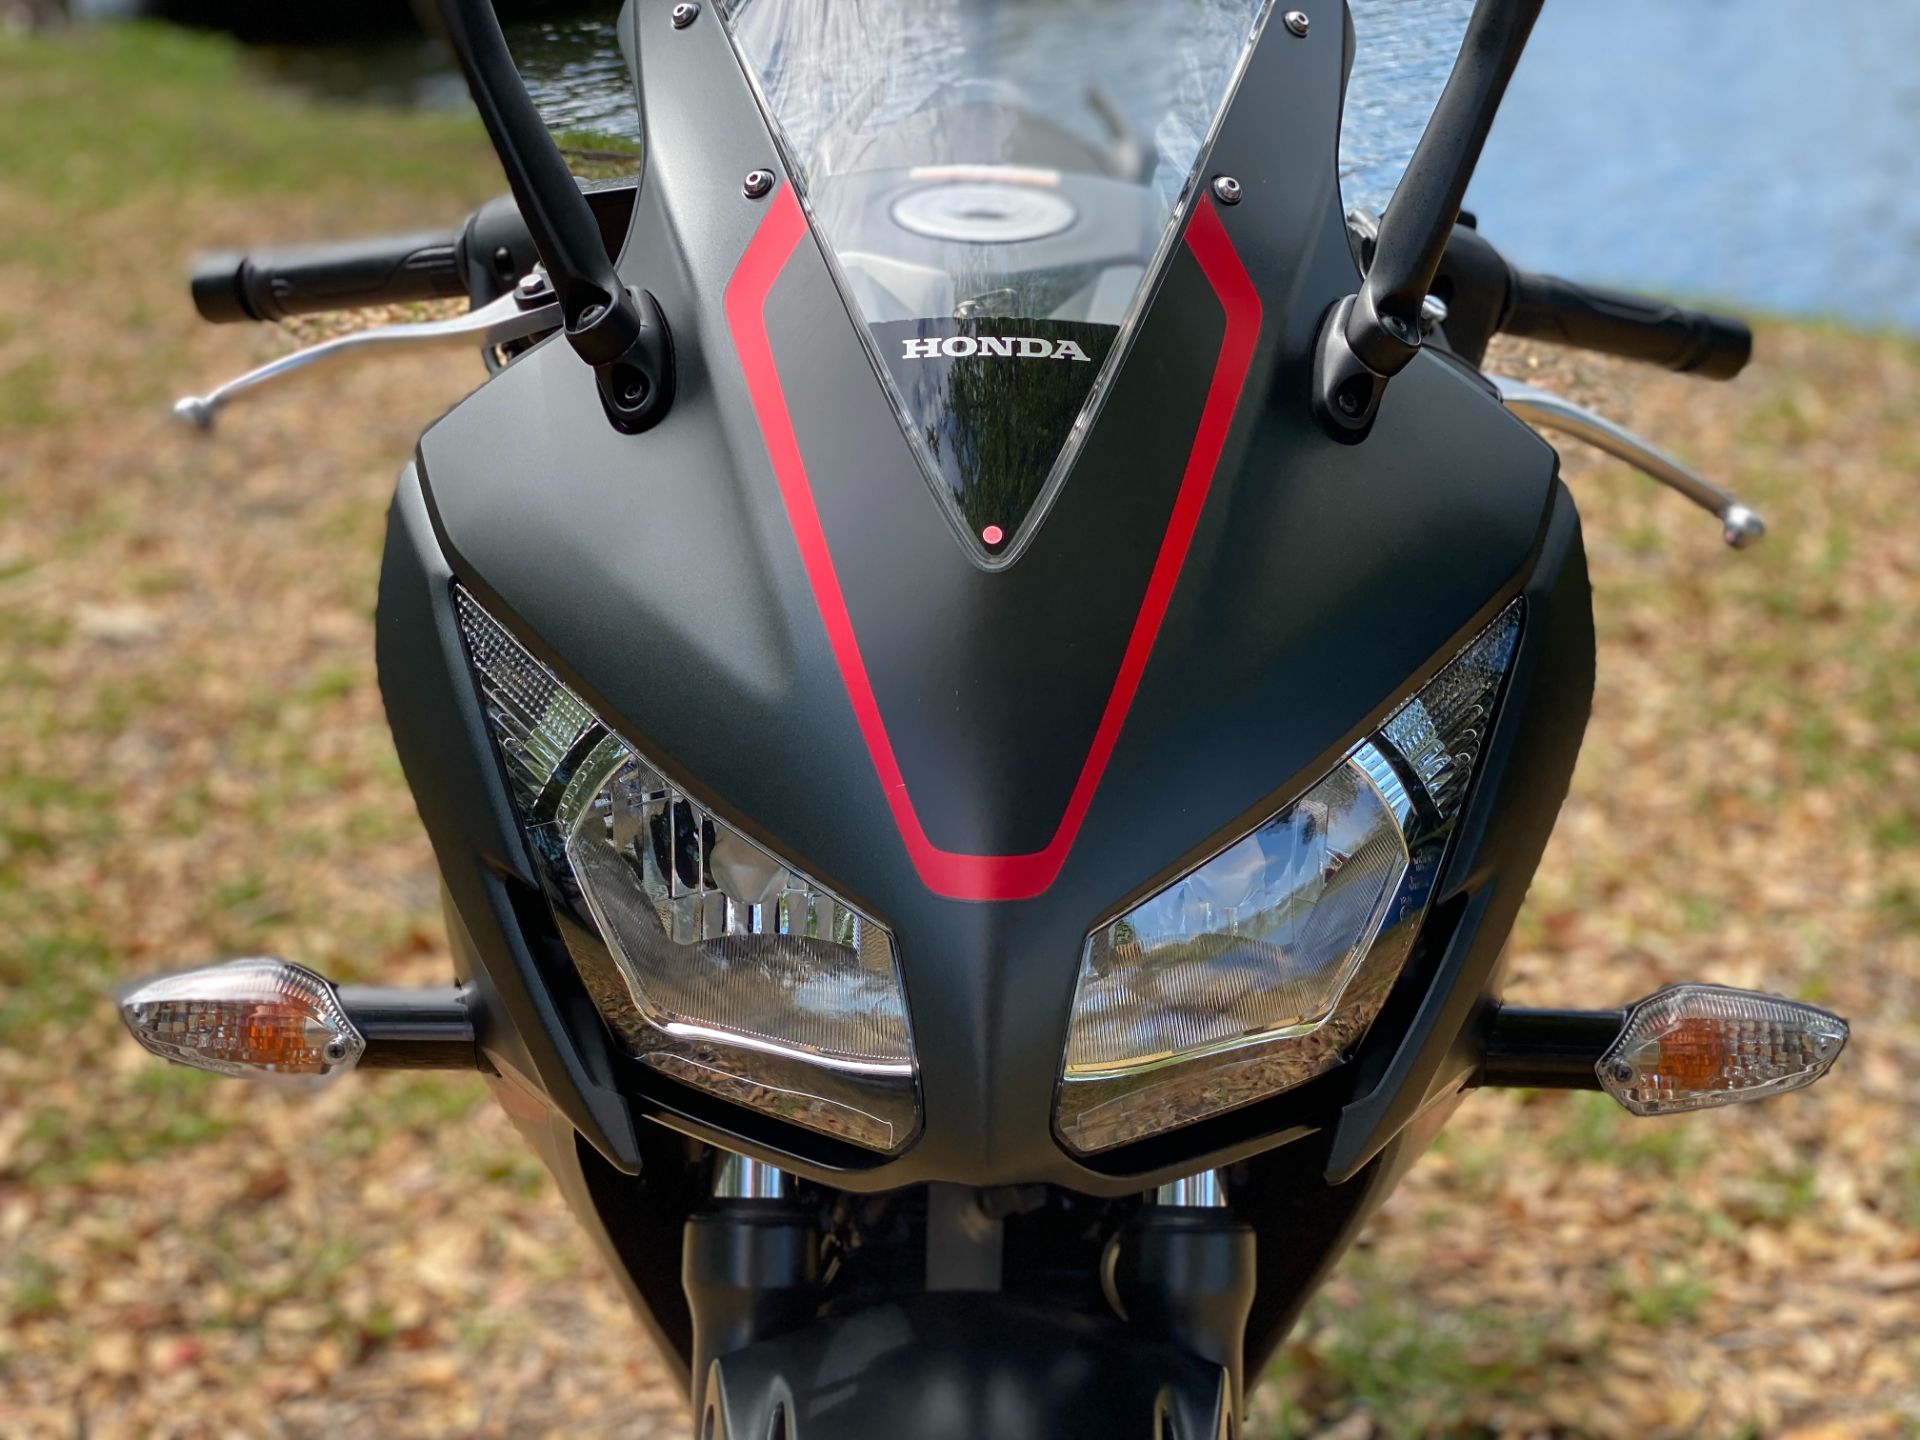 2019 Honda CBR300R ABS in North Miami Beach, Florida - Photo 13